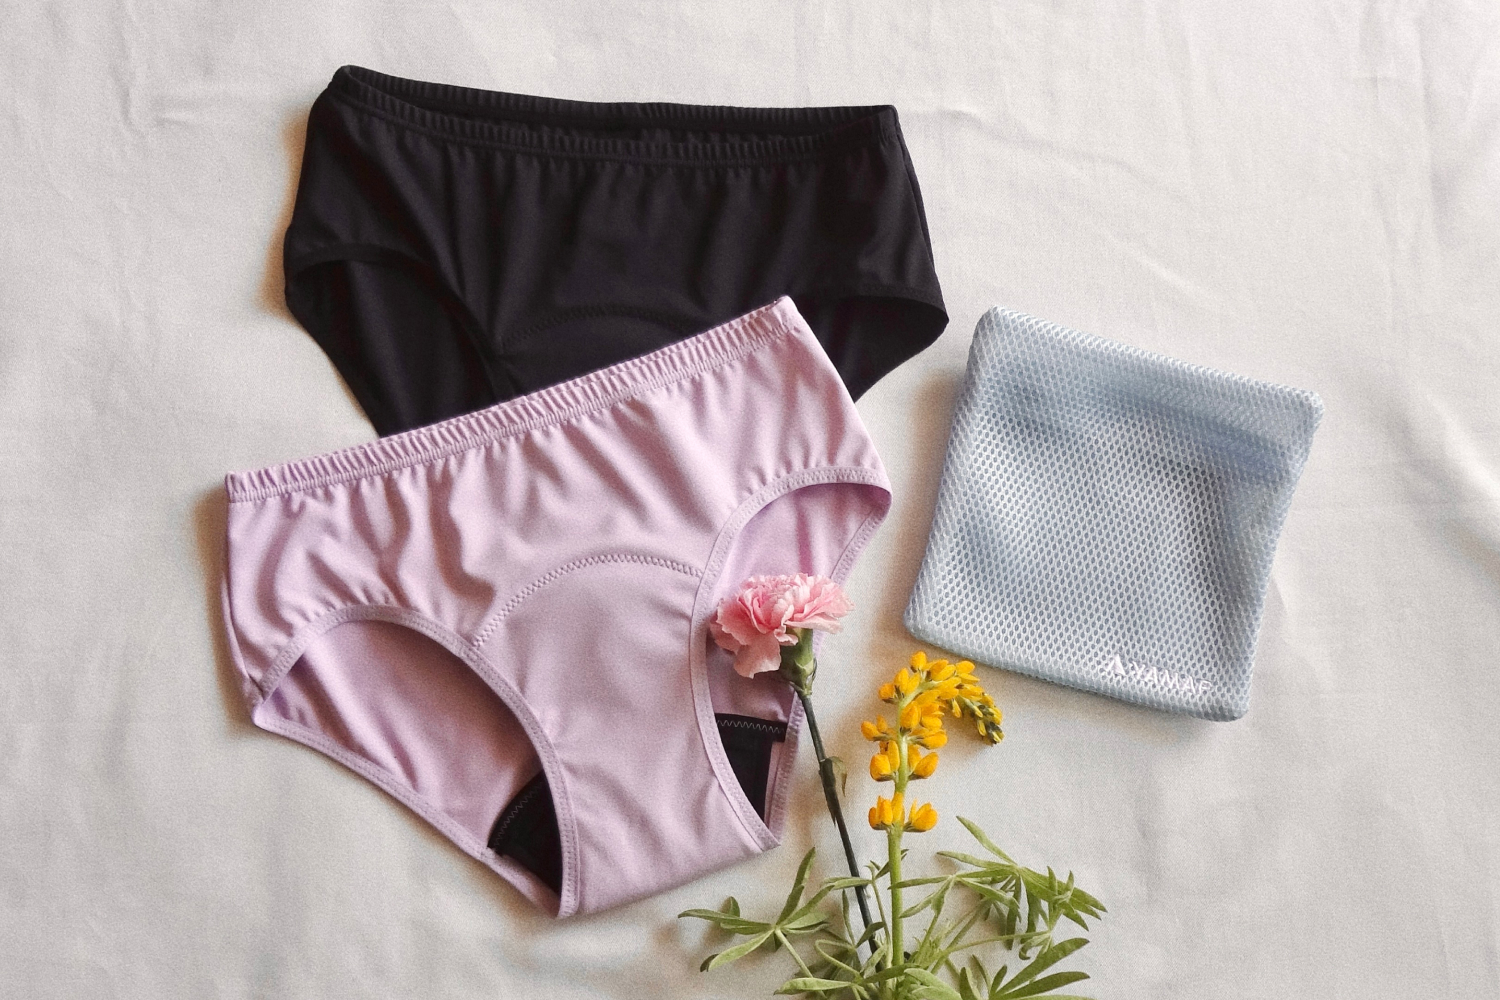 /features/yamap-hoagara-sanitary-shorts